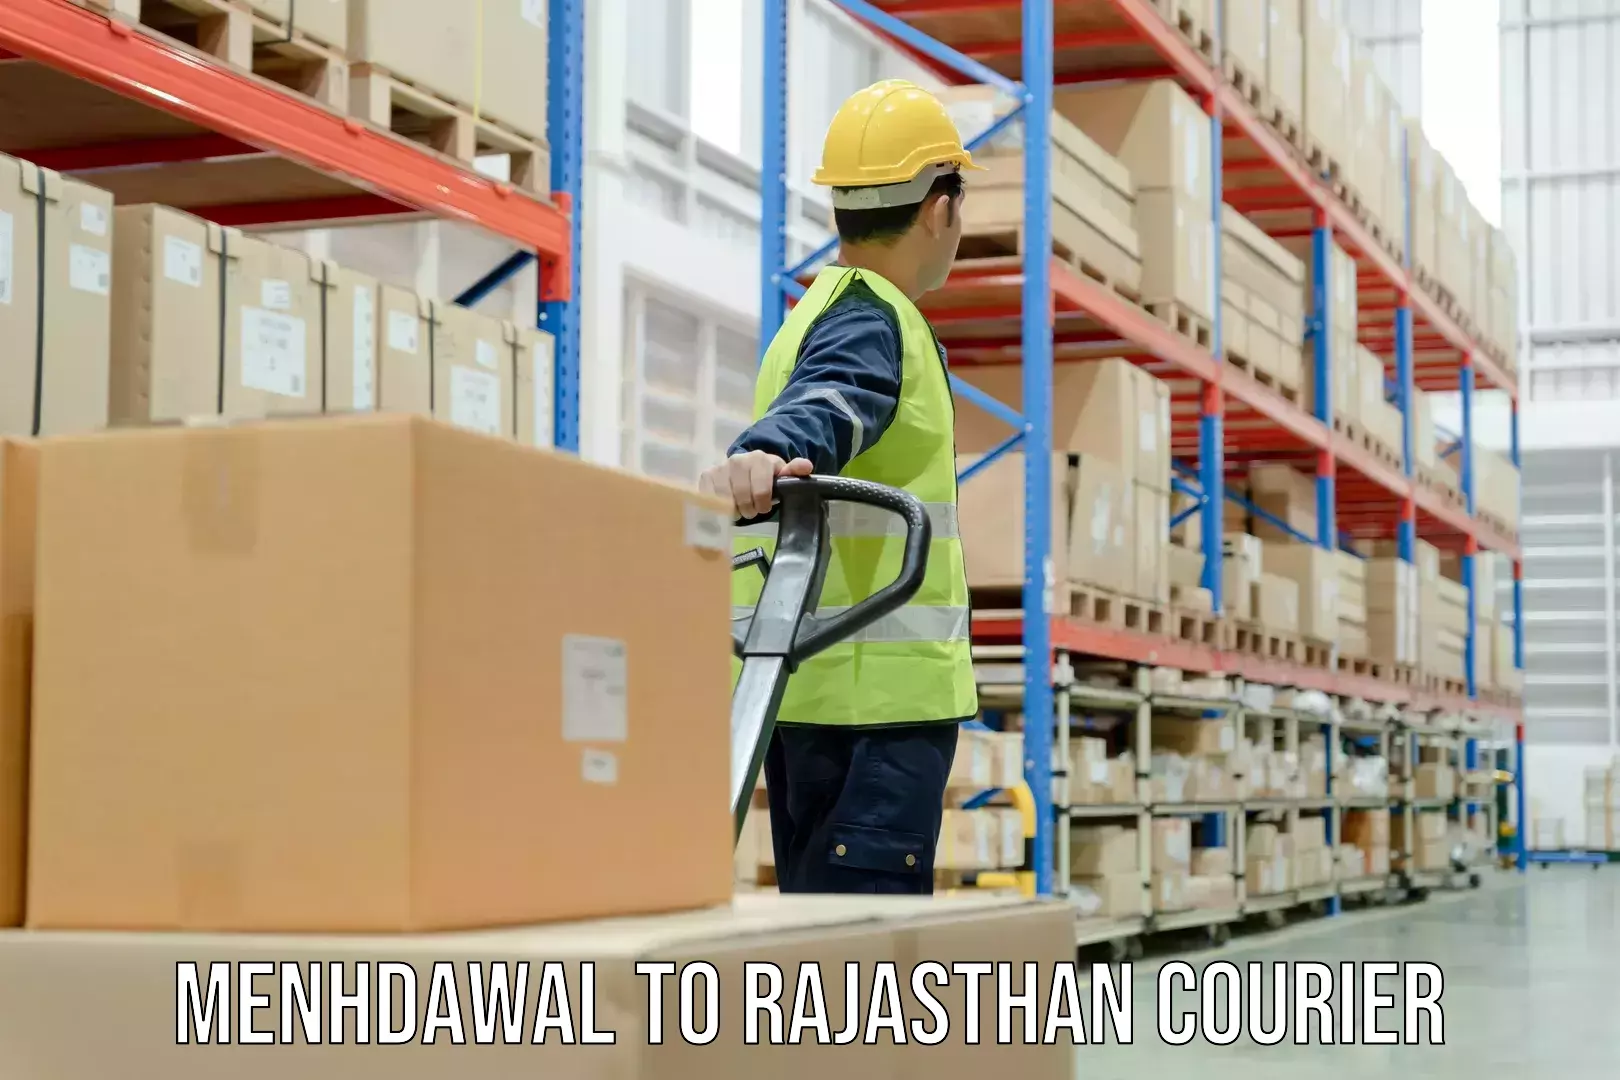 Regular parcel service Menhdawal to Sultana